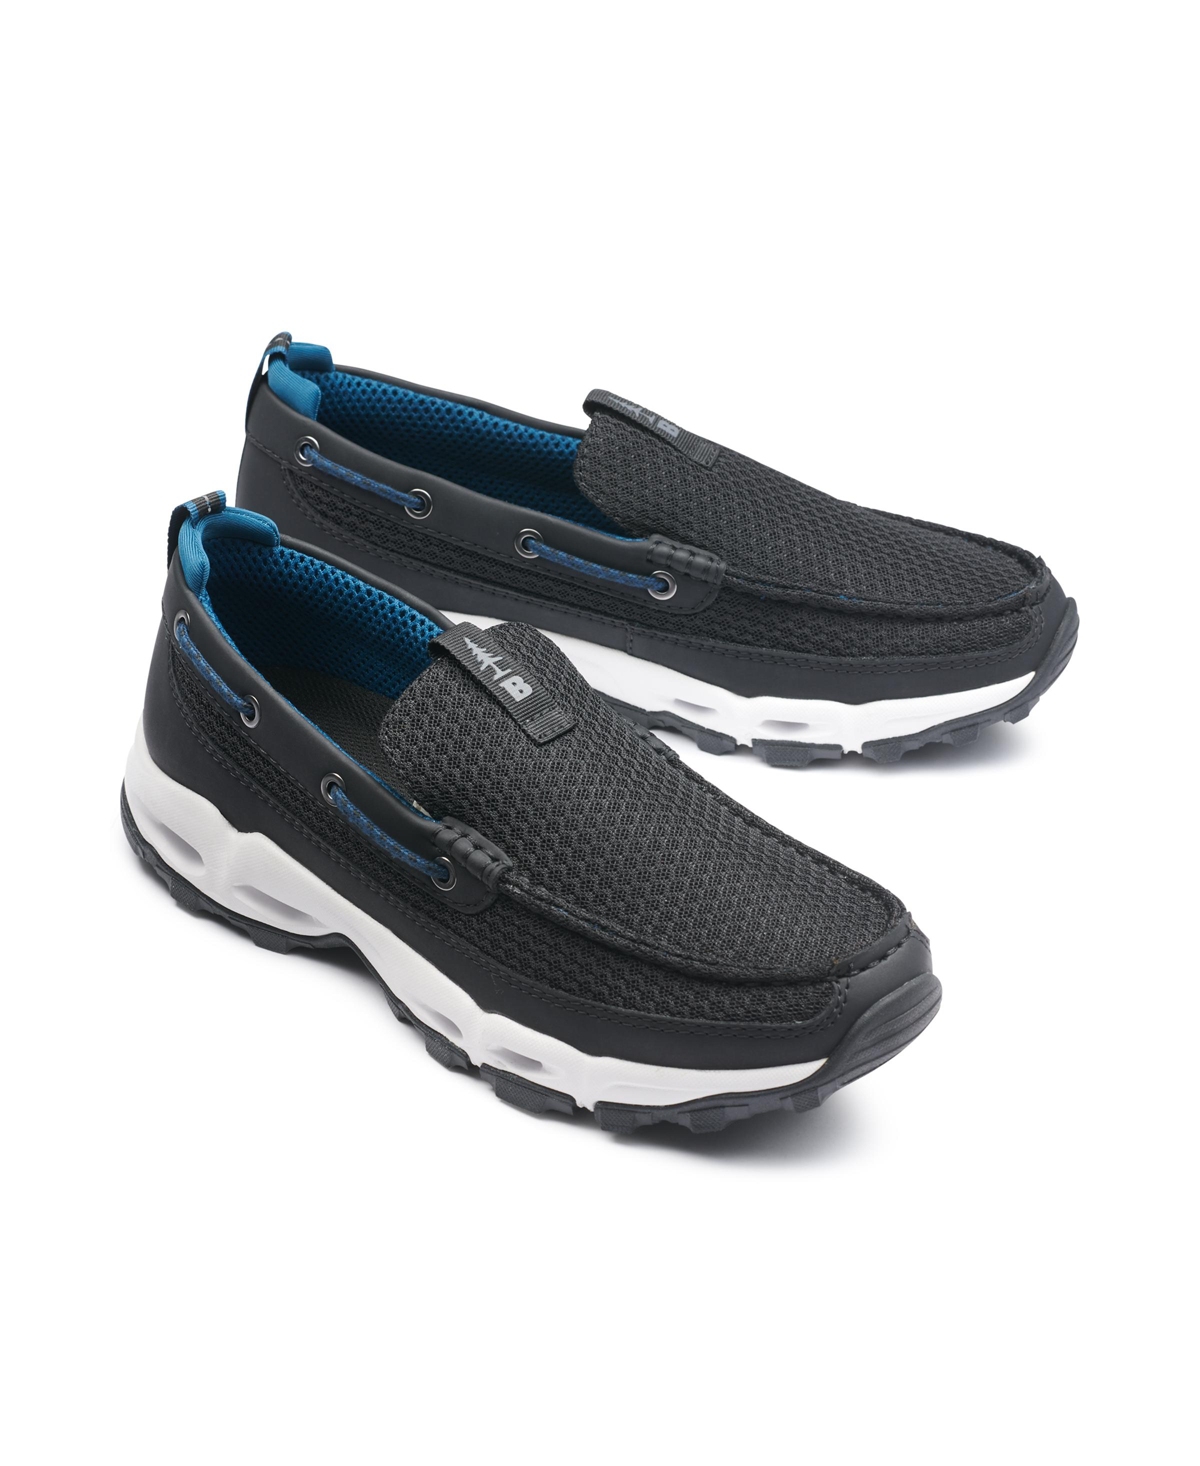 Men's Water Resistant Aqua Deck Shoe - Black